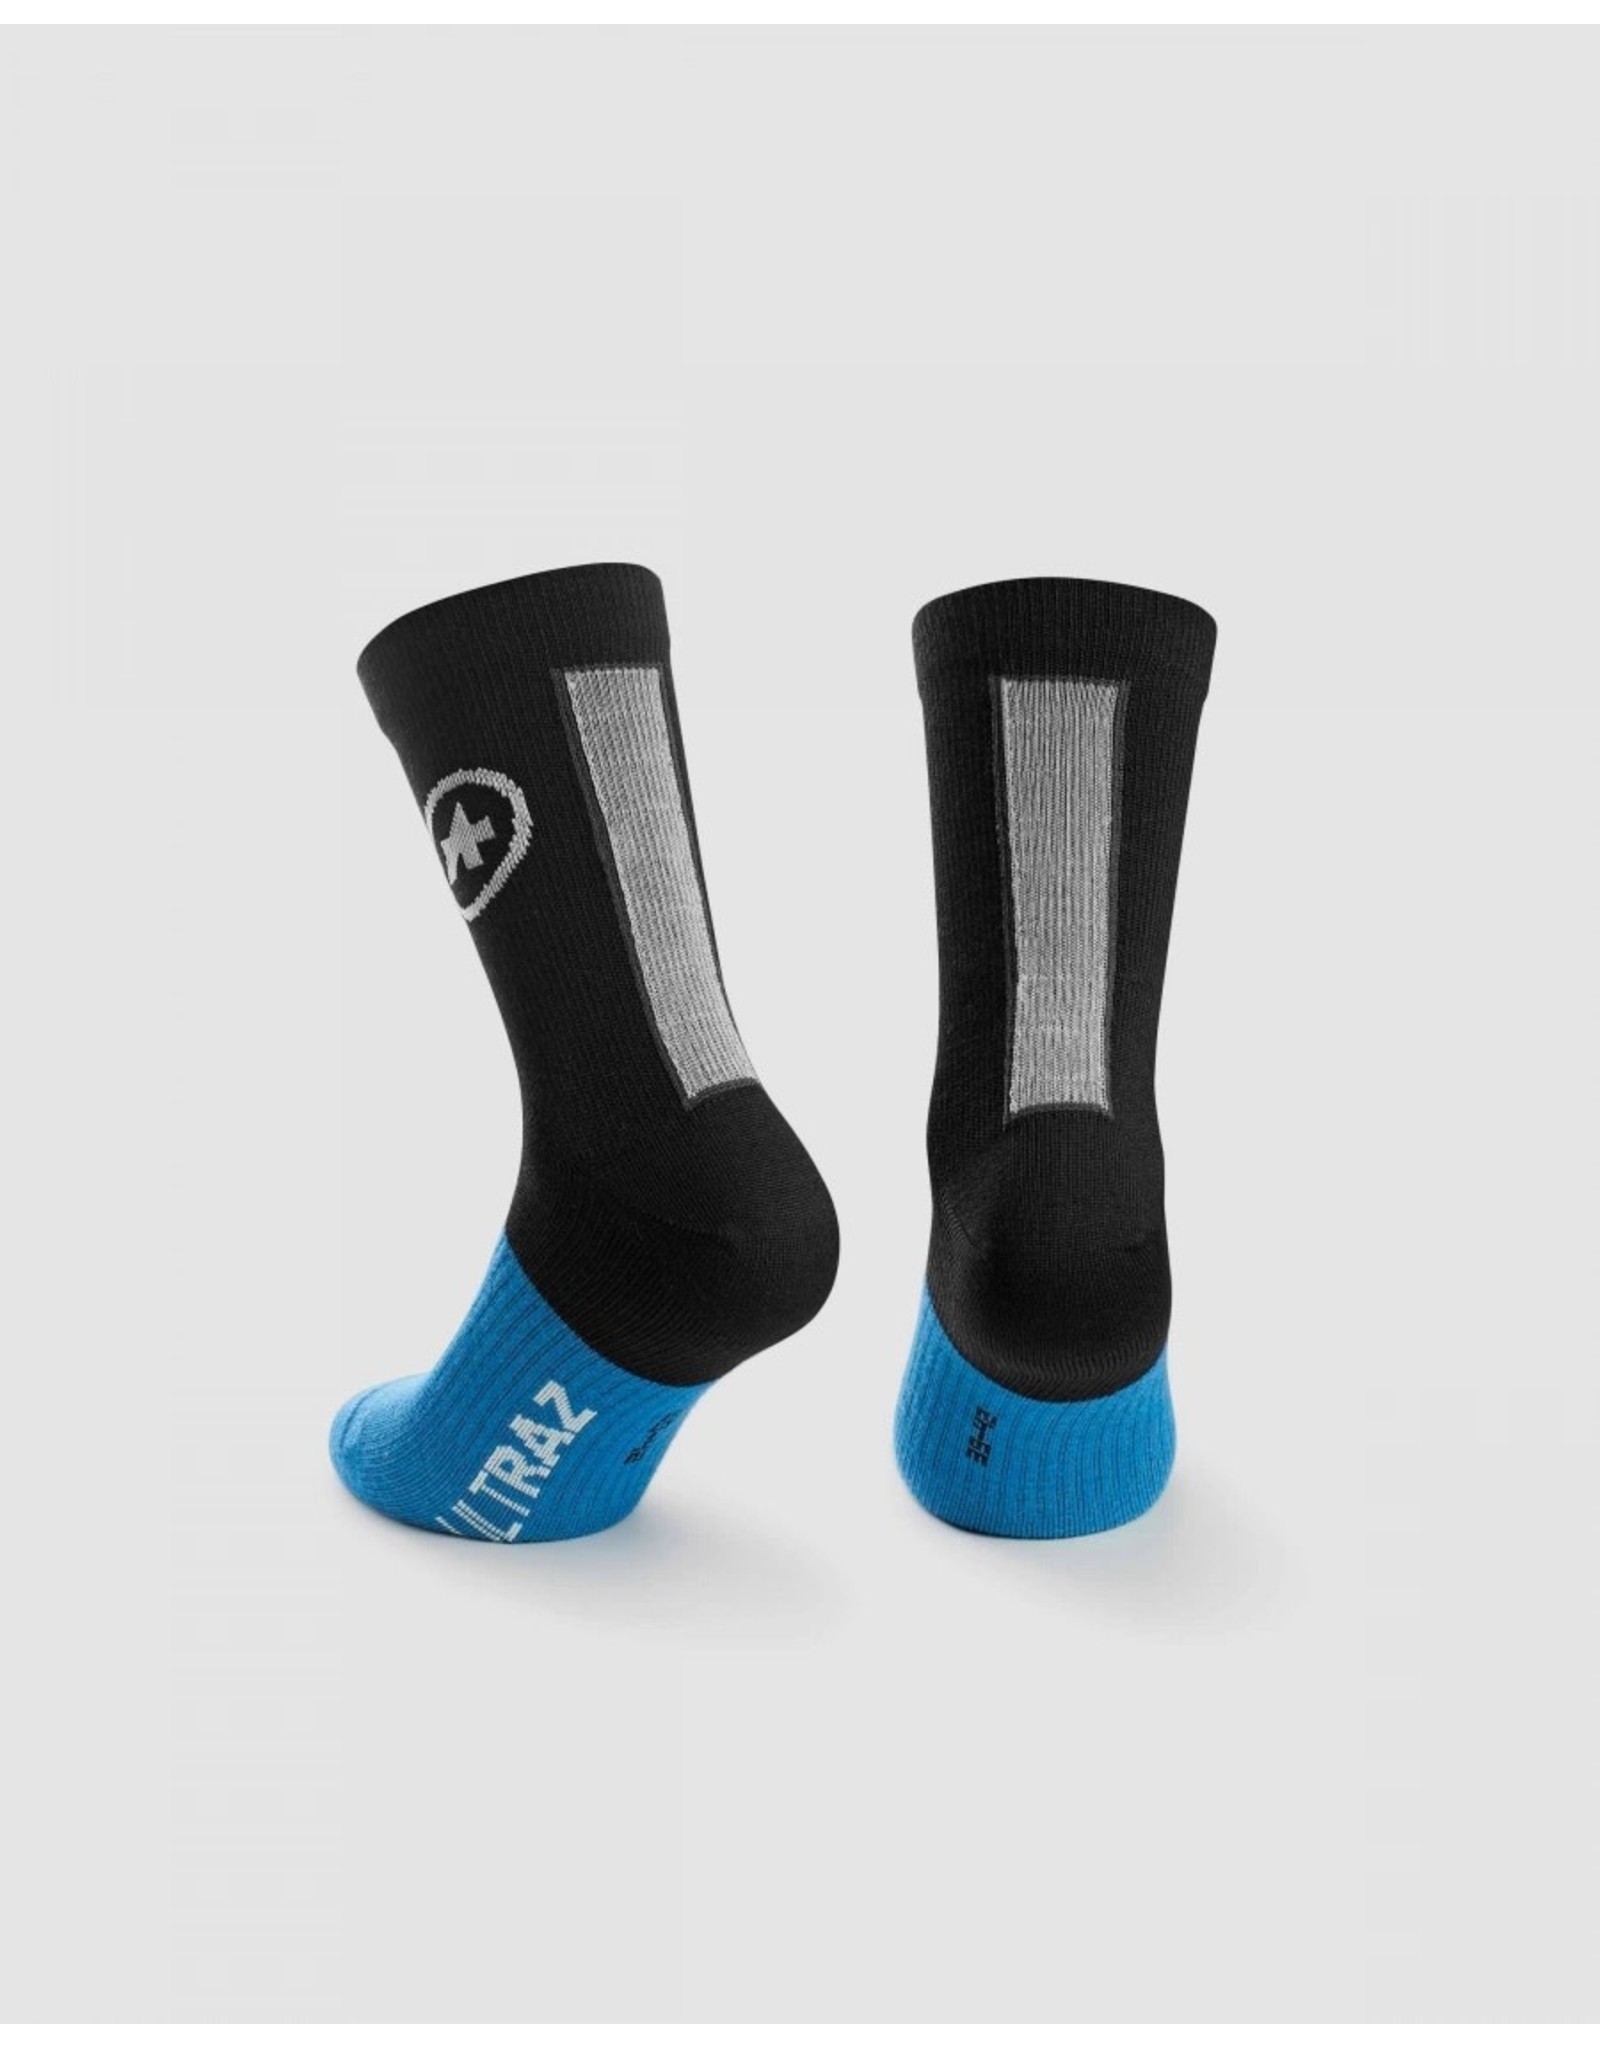 Assos Assos Ultraz Winter Socks blackseries